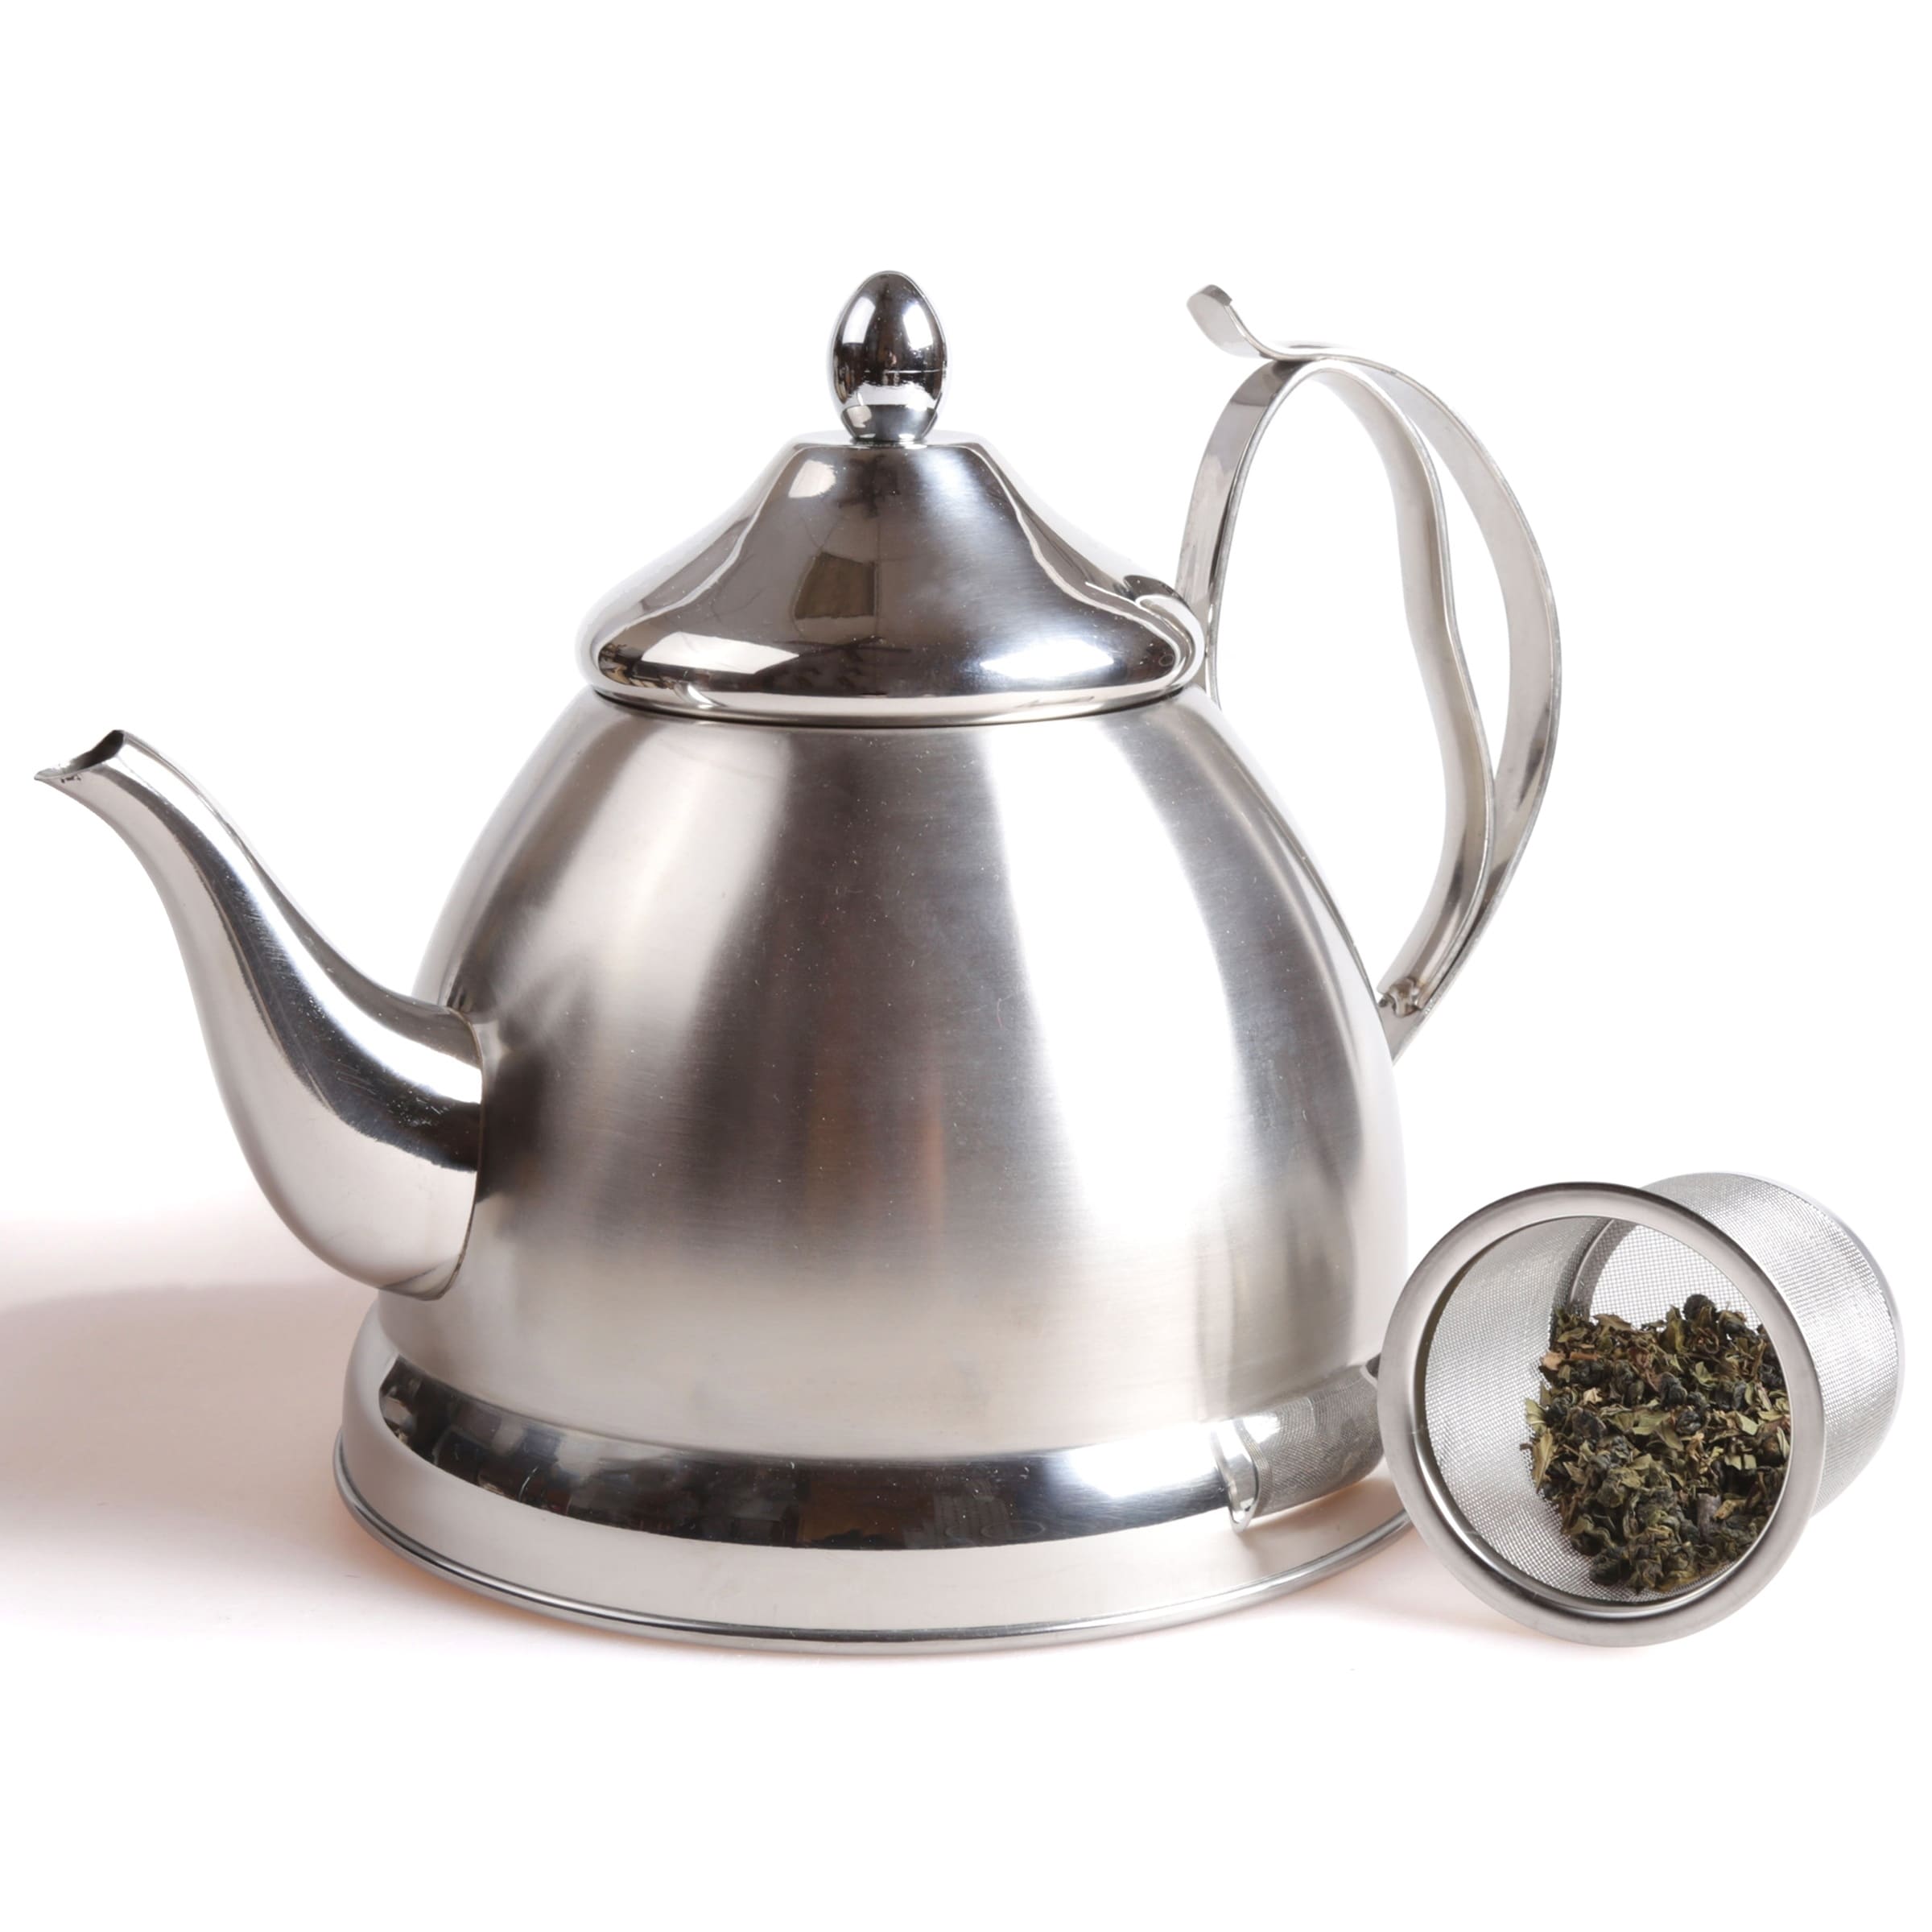 https://ak1.ostkcdn.com/images/products/10669204/Creative-Home-Nobili-Tea-2.0-Qt.-Stainless-Steel-Tea-Kettle-Tea-Pot-with-Infuser-Basket-6e816d45-3969-4588-8709-953ca683092a.jpg